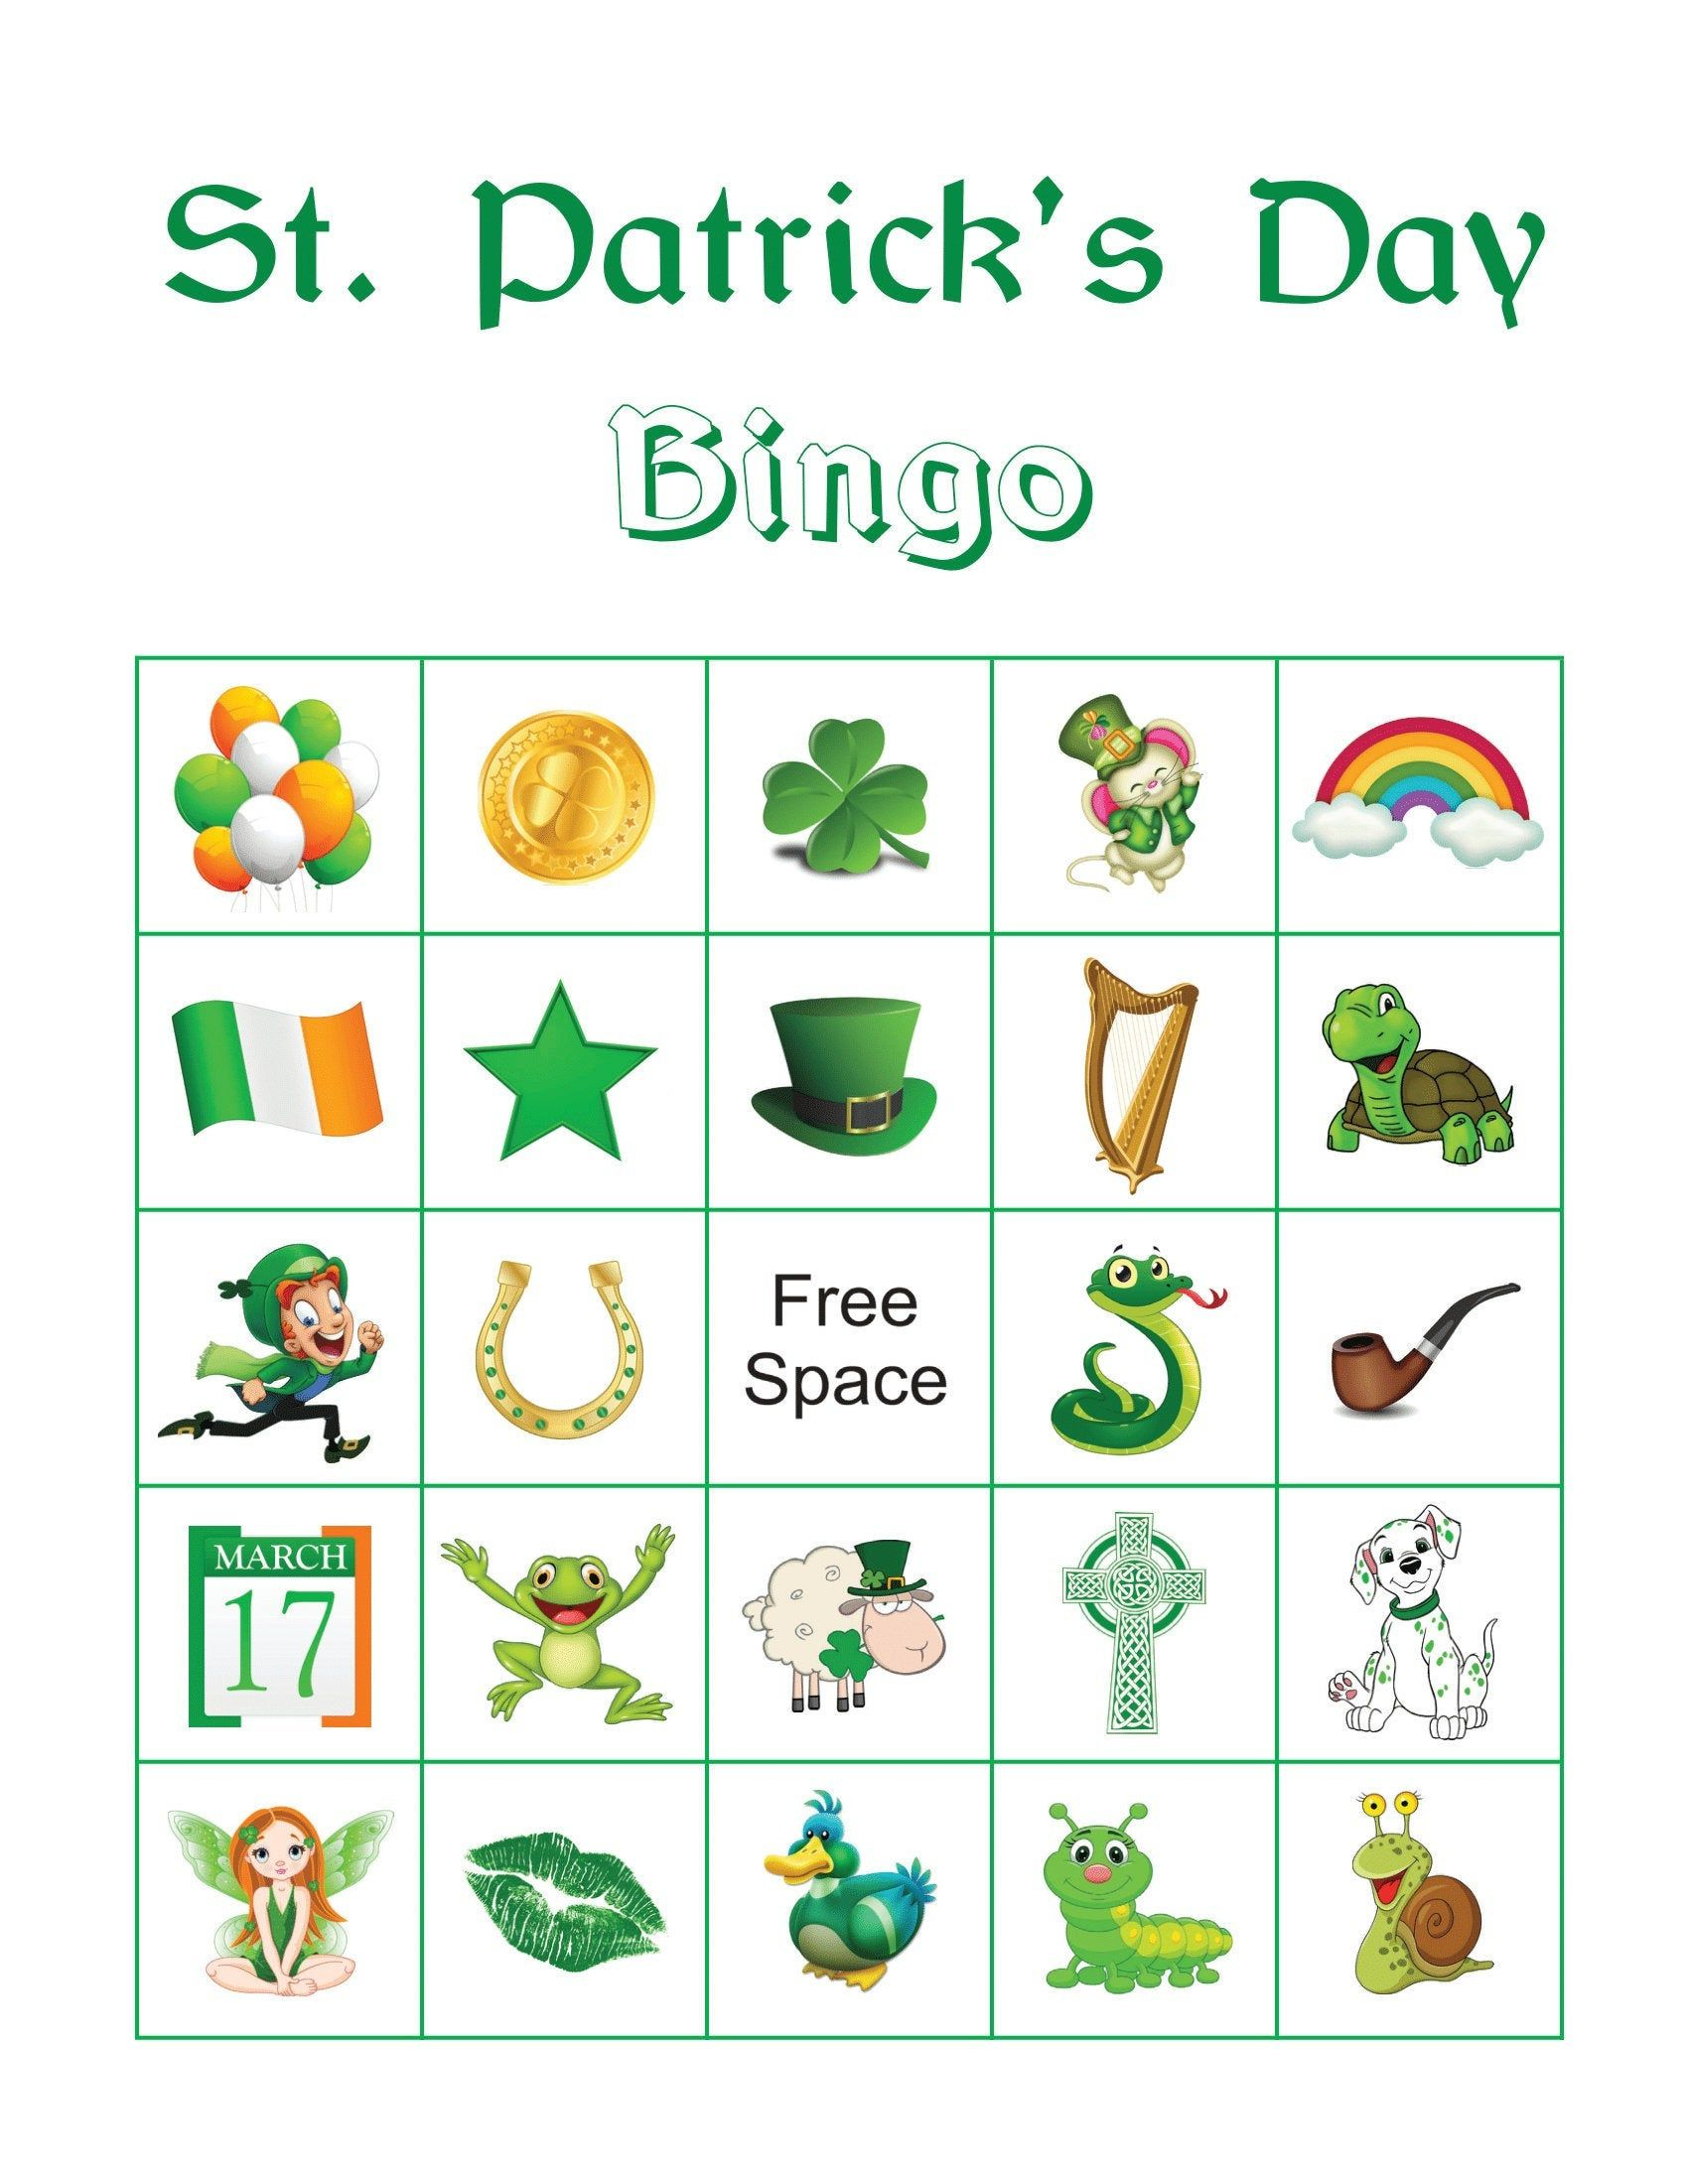 100 St Patrick s Day Picture Bingo Cards Prints 1 Per Etsy In 2020 